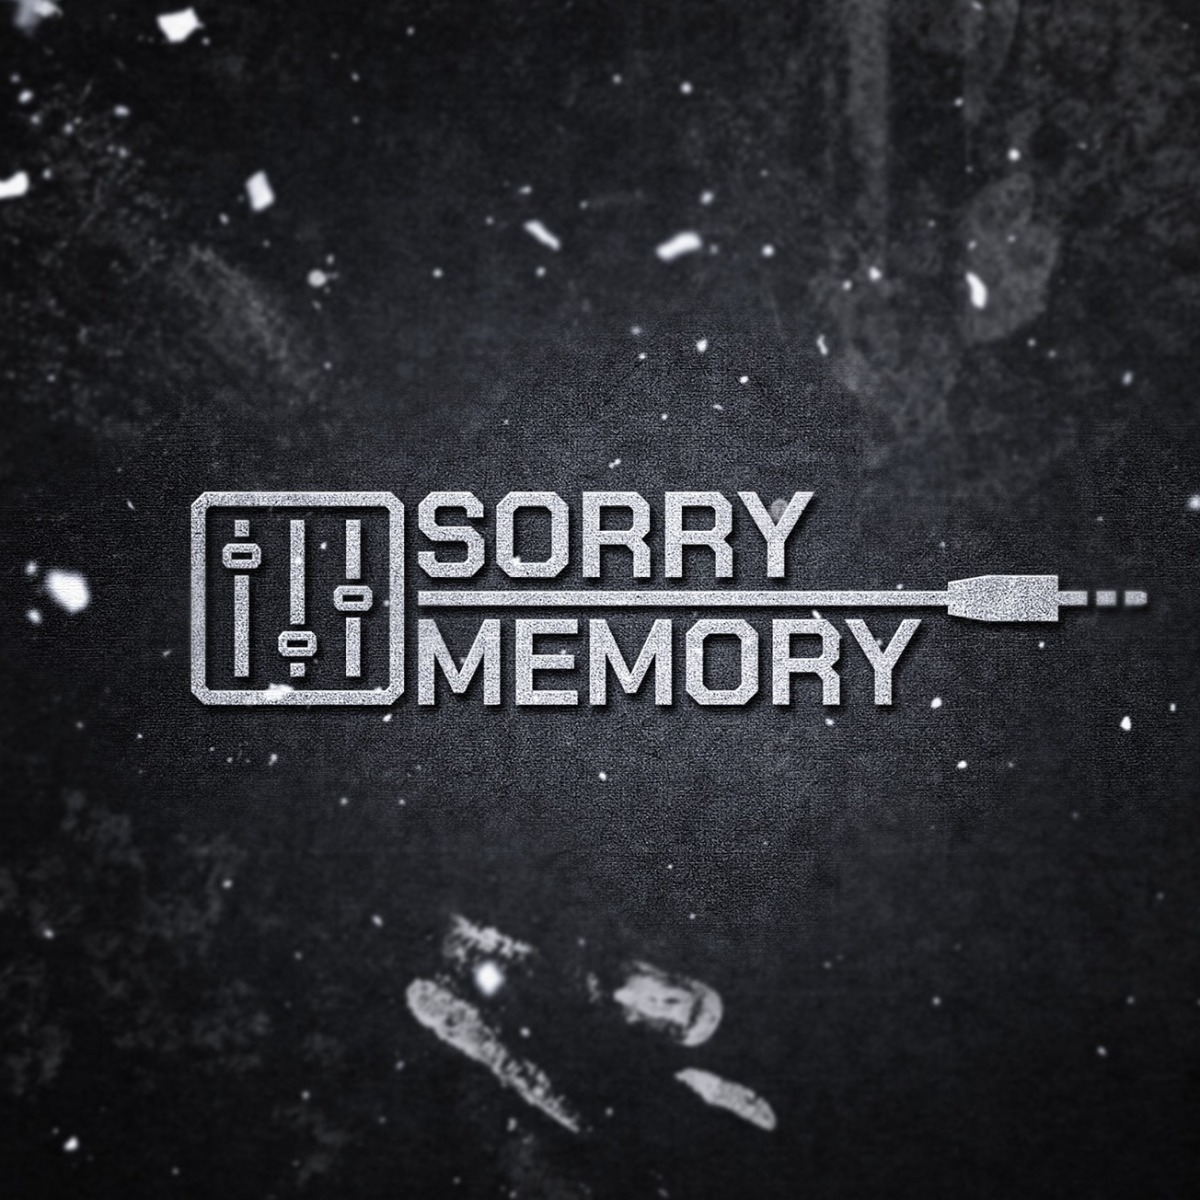 Sorry Memory